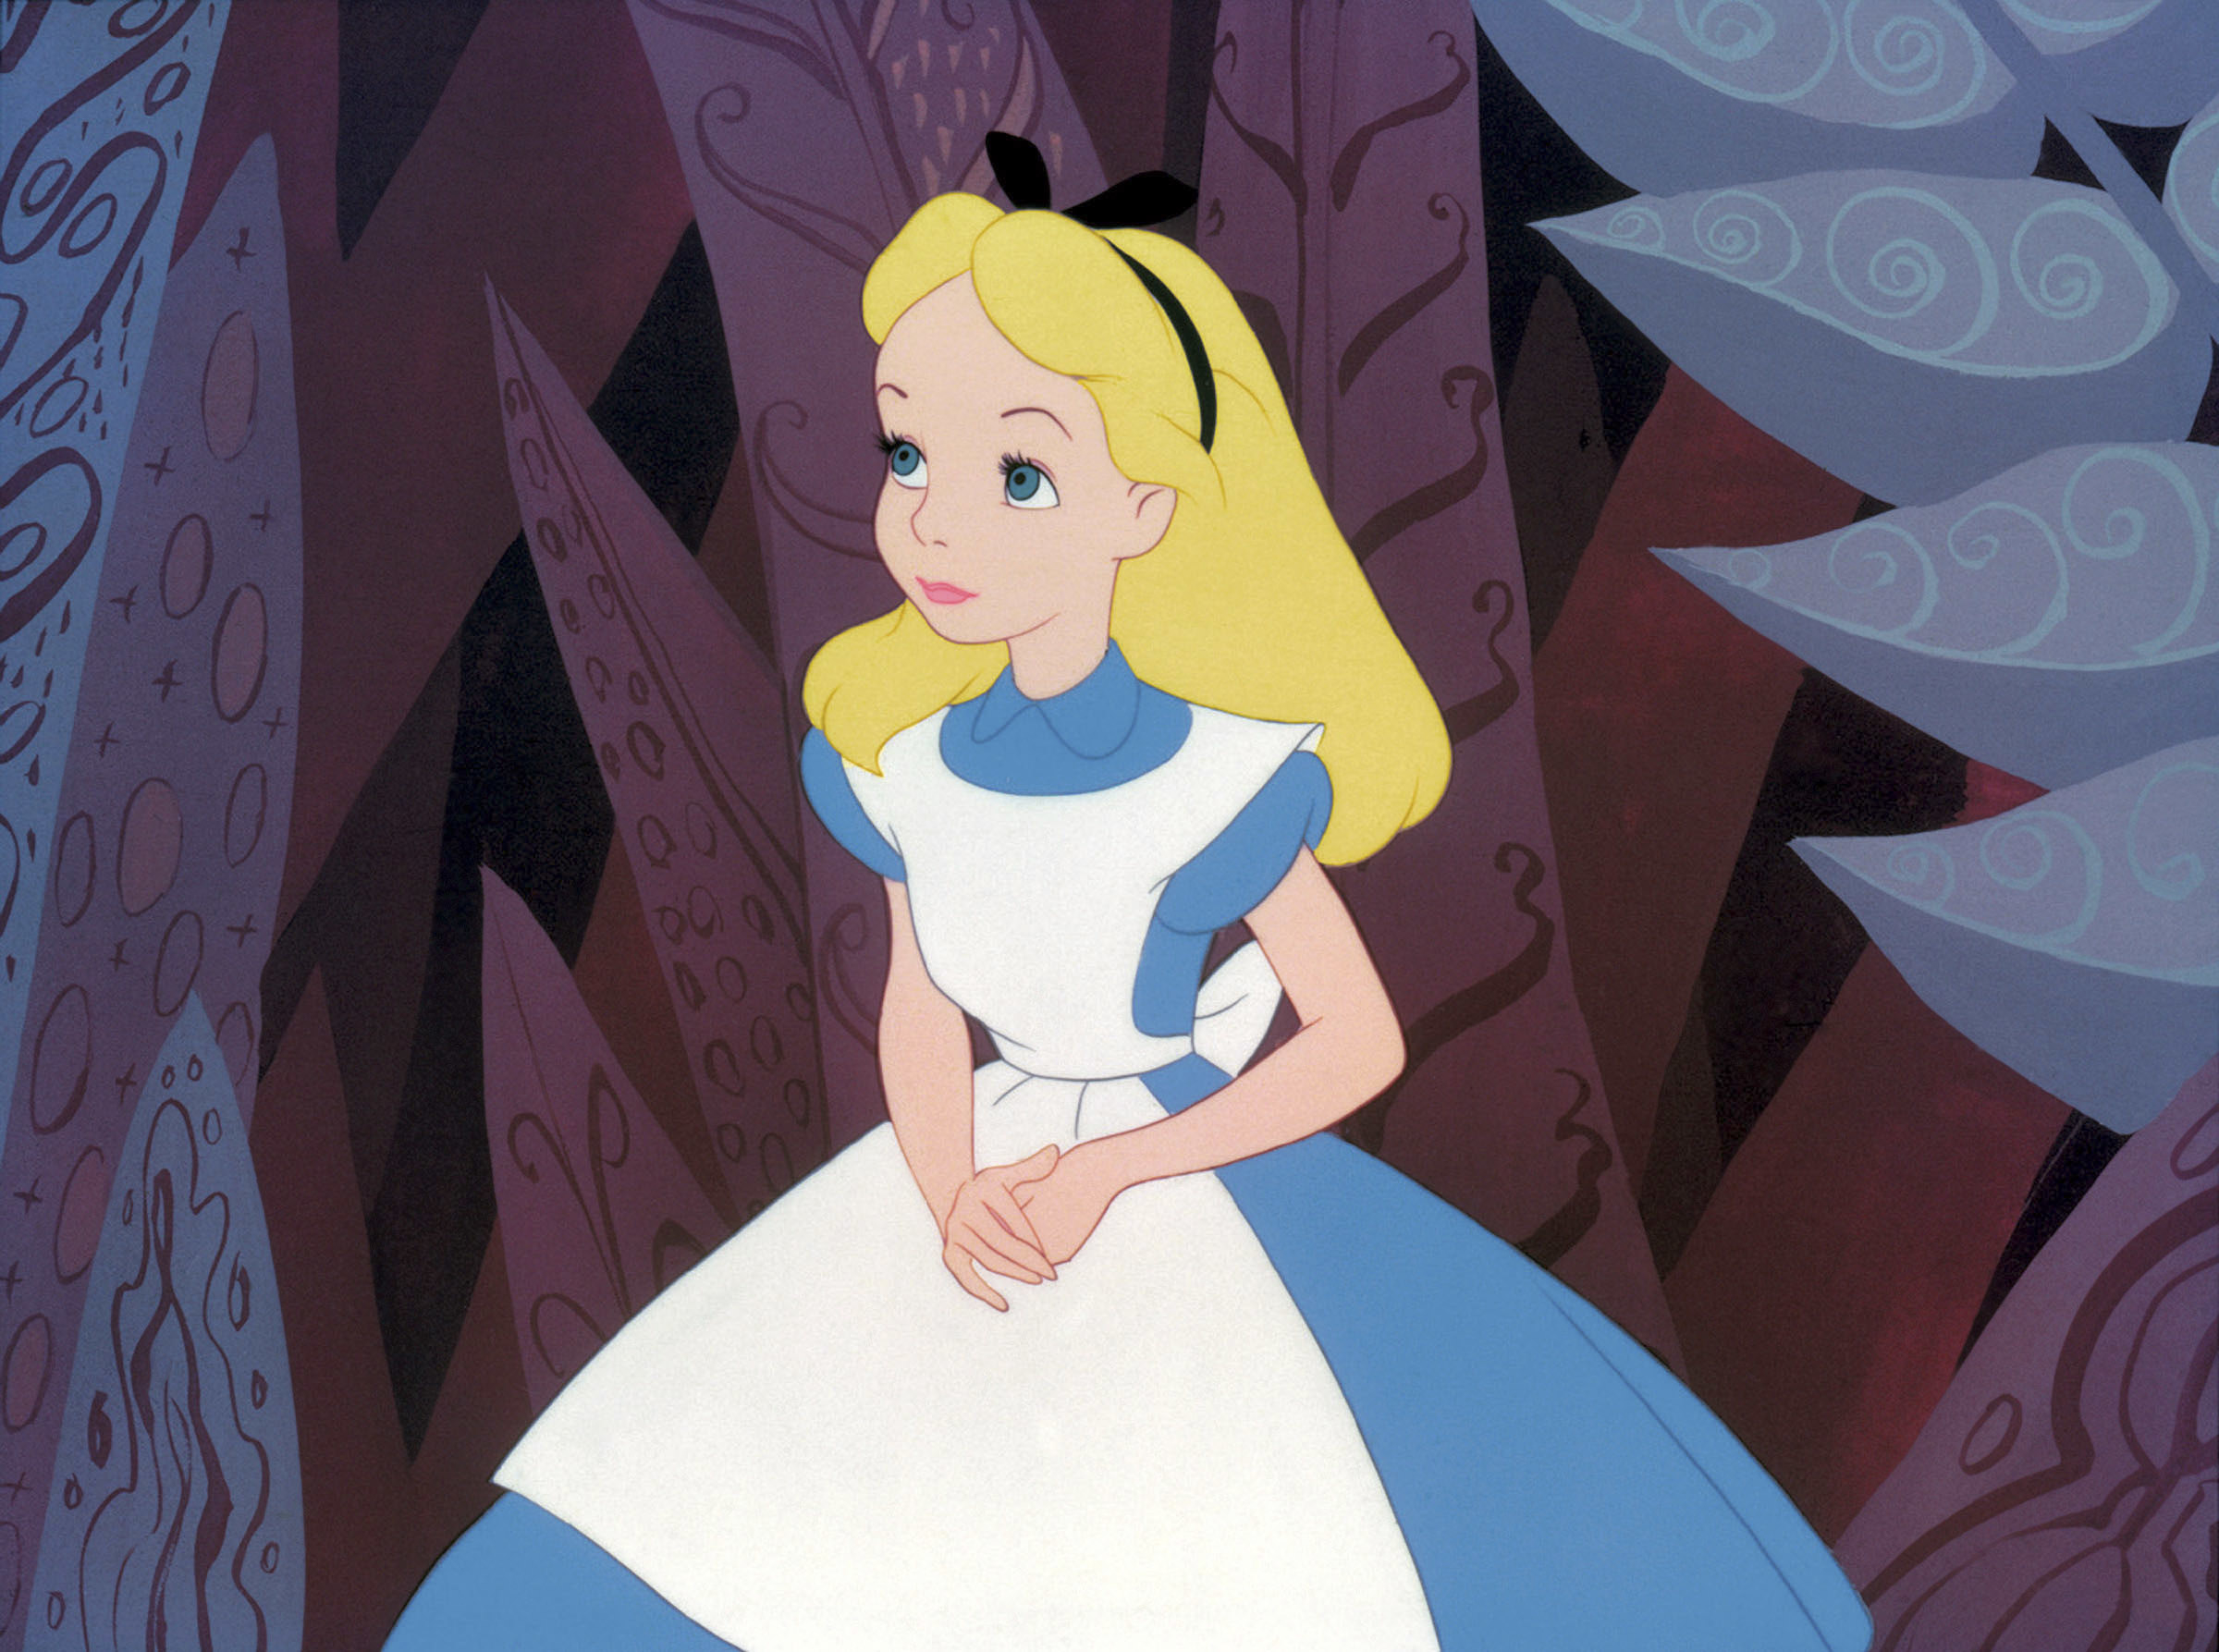 Alice in the animated version of Alice in Wonderland